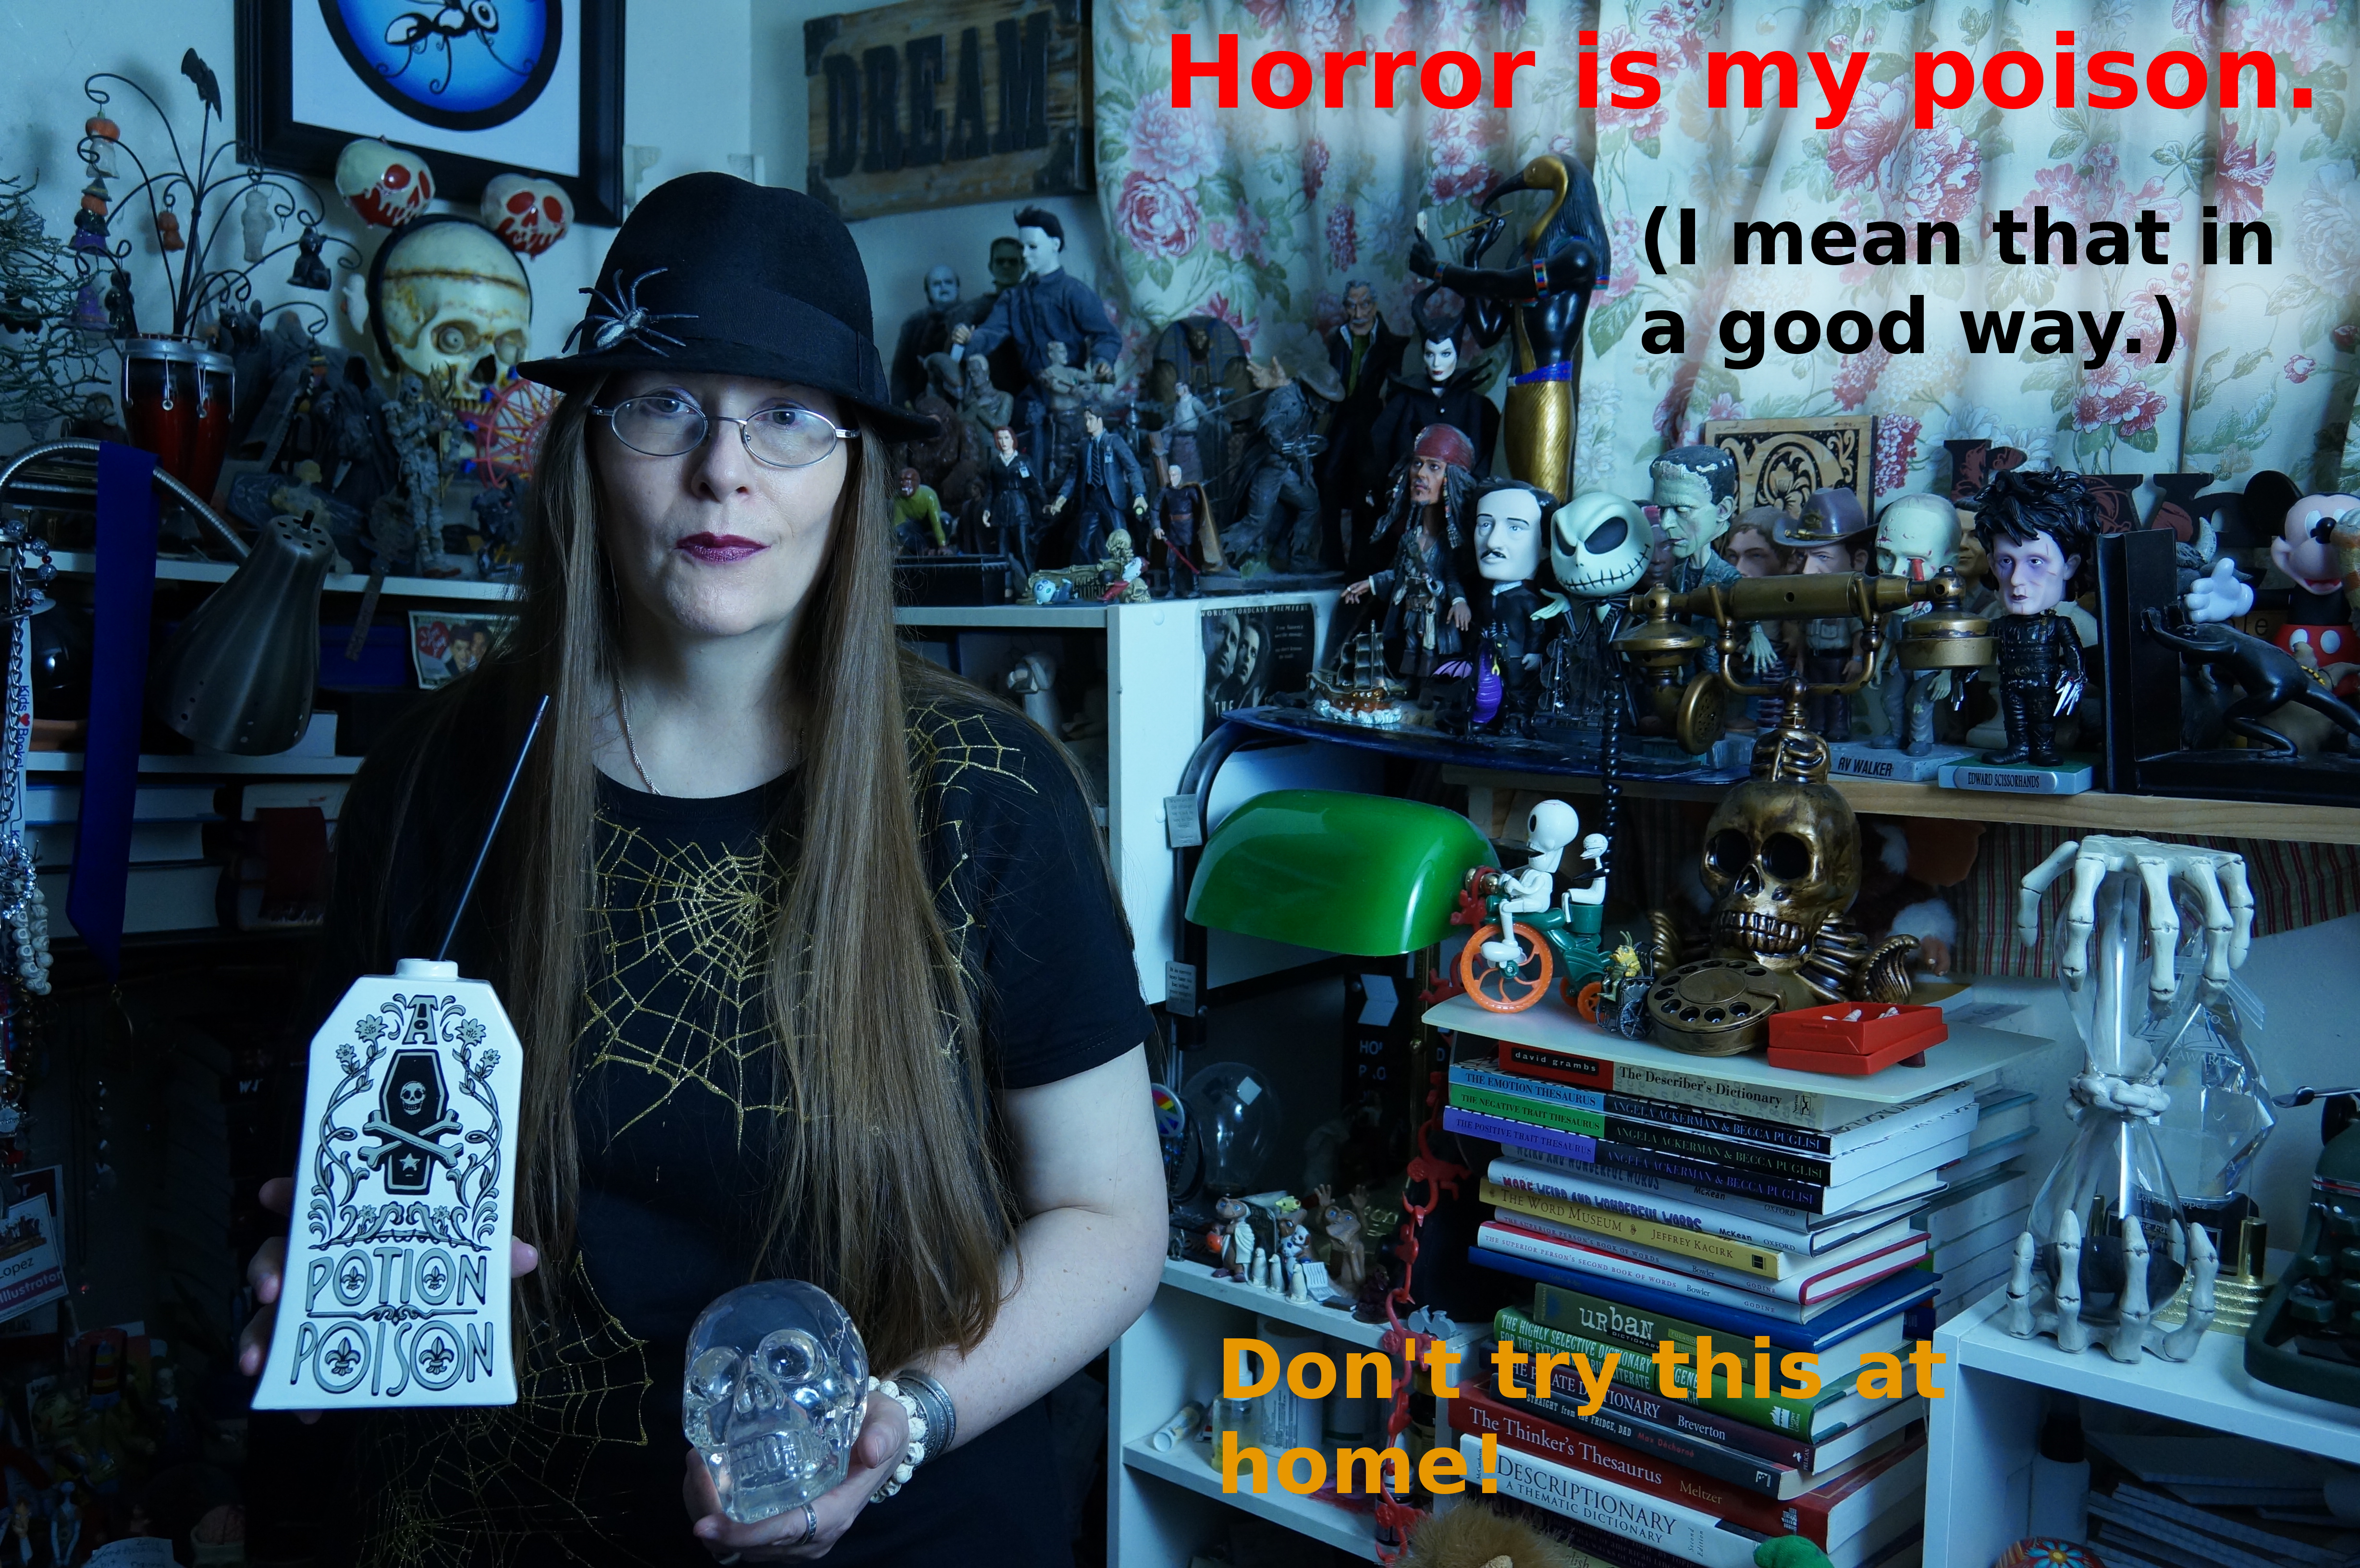 Lori R. Lopez, Horror Selfie at Horror Writers Association Horrorselfie.com http://horrorselfies.com/lori-r-lopez/